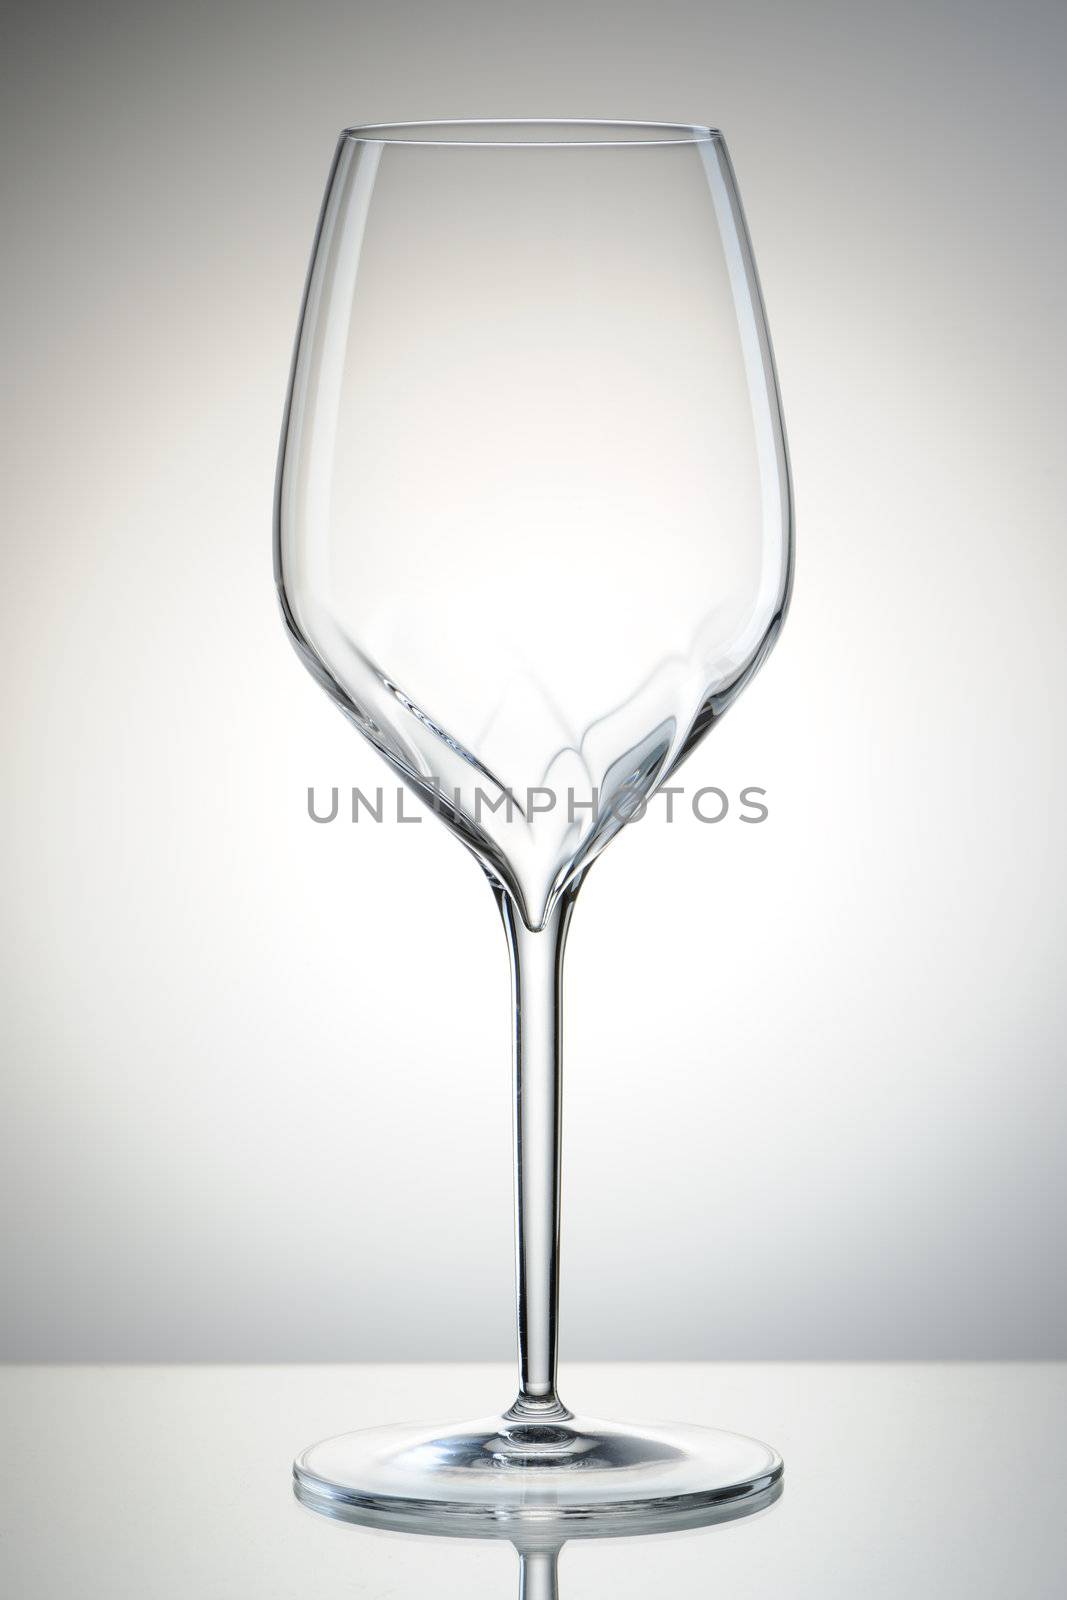 Empty wine glass with reflection